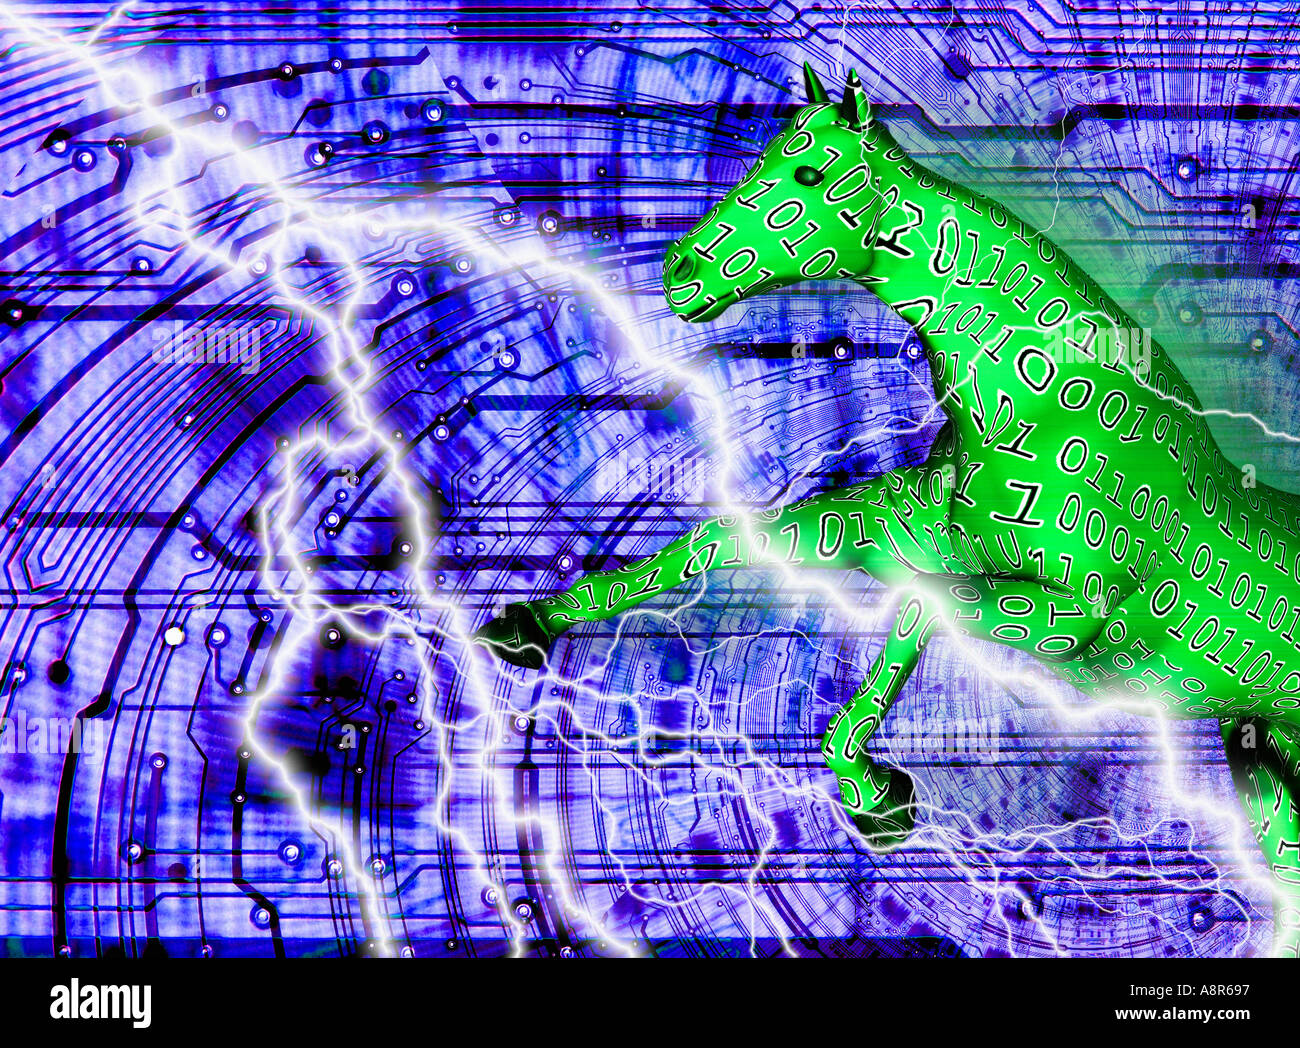 Trojan Horse Computer Virus Stock Photo